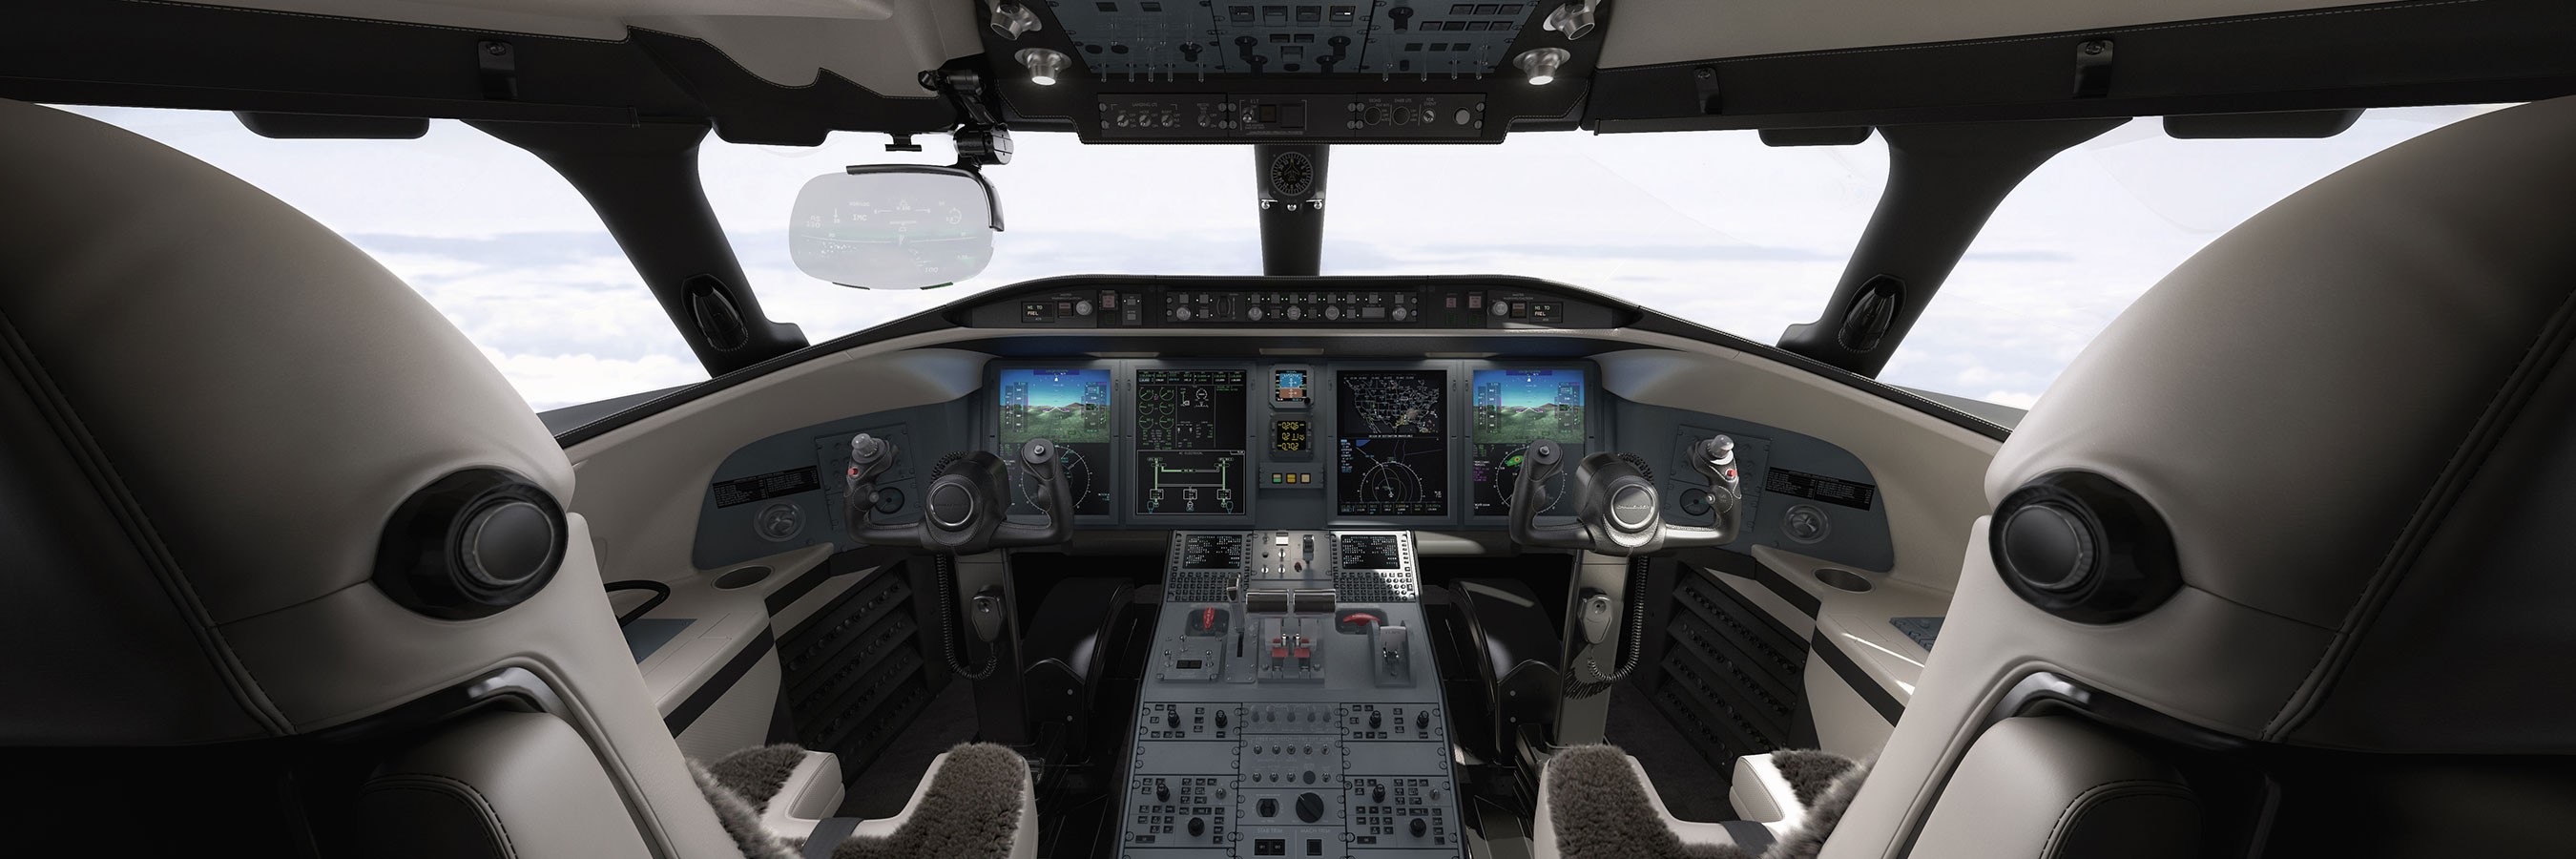 Challenger 650 - Cockpit